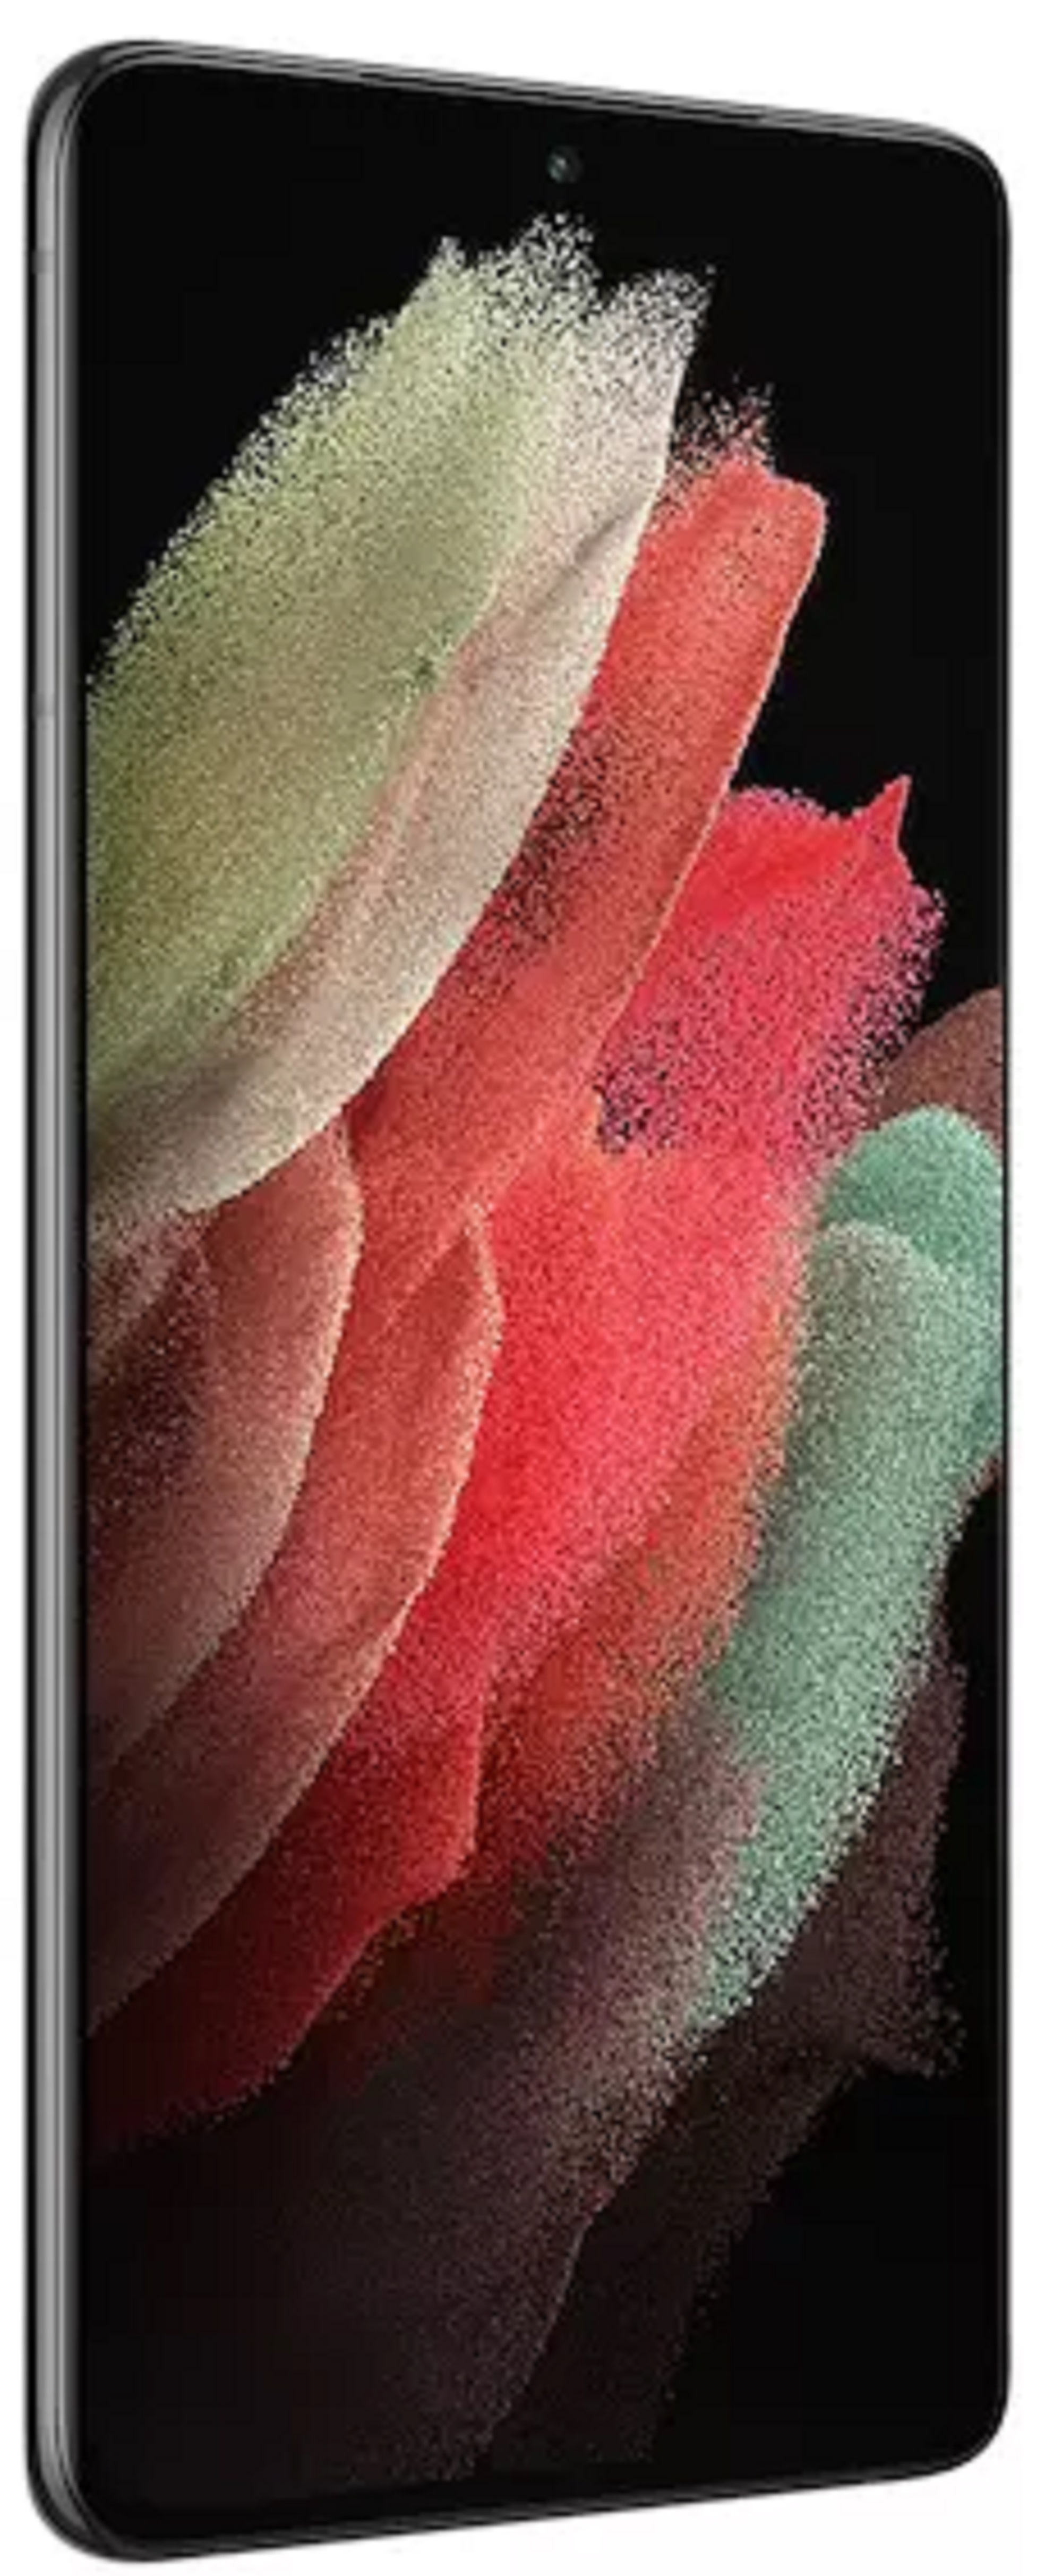 Open Box Samsung Galaxy S21 Ultra 5G SM-G998U1 128GB Bronze (US Model) - Factory Unlocked Cell Phone - image 4 of 4